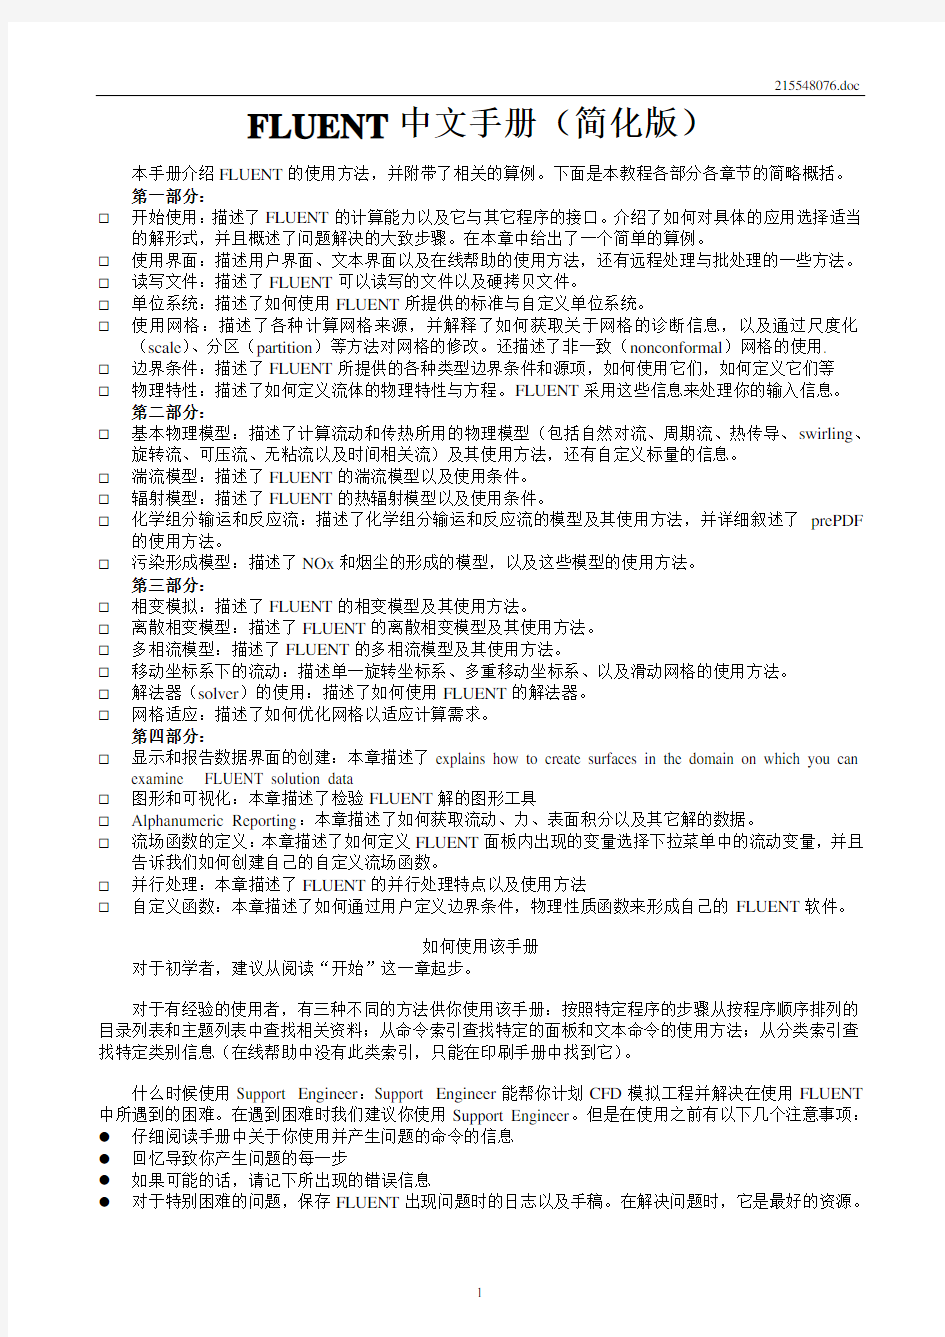 《FLUENT中文手册(简化版)》